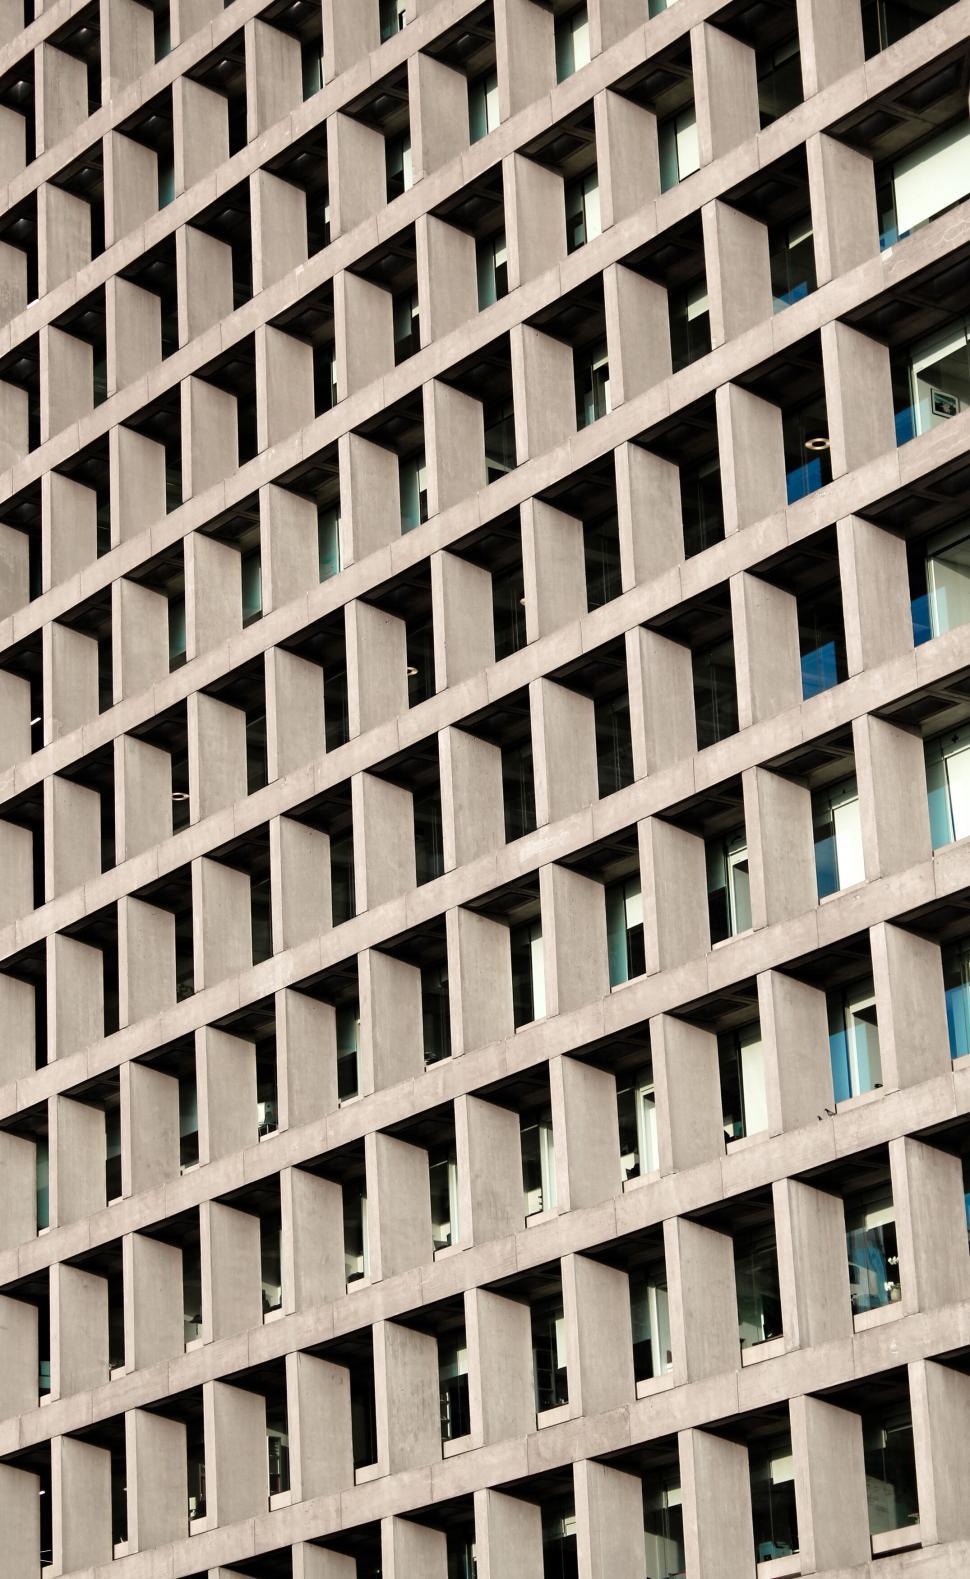 Free Image of Geometric pattern of building facade windows 